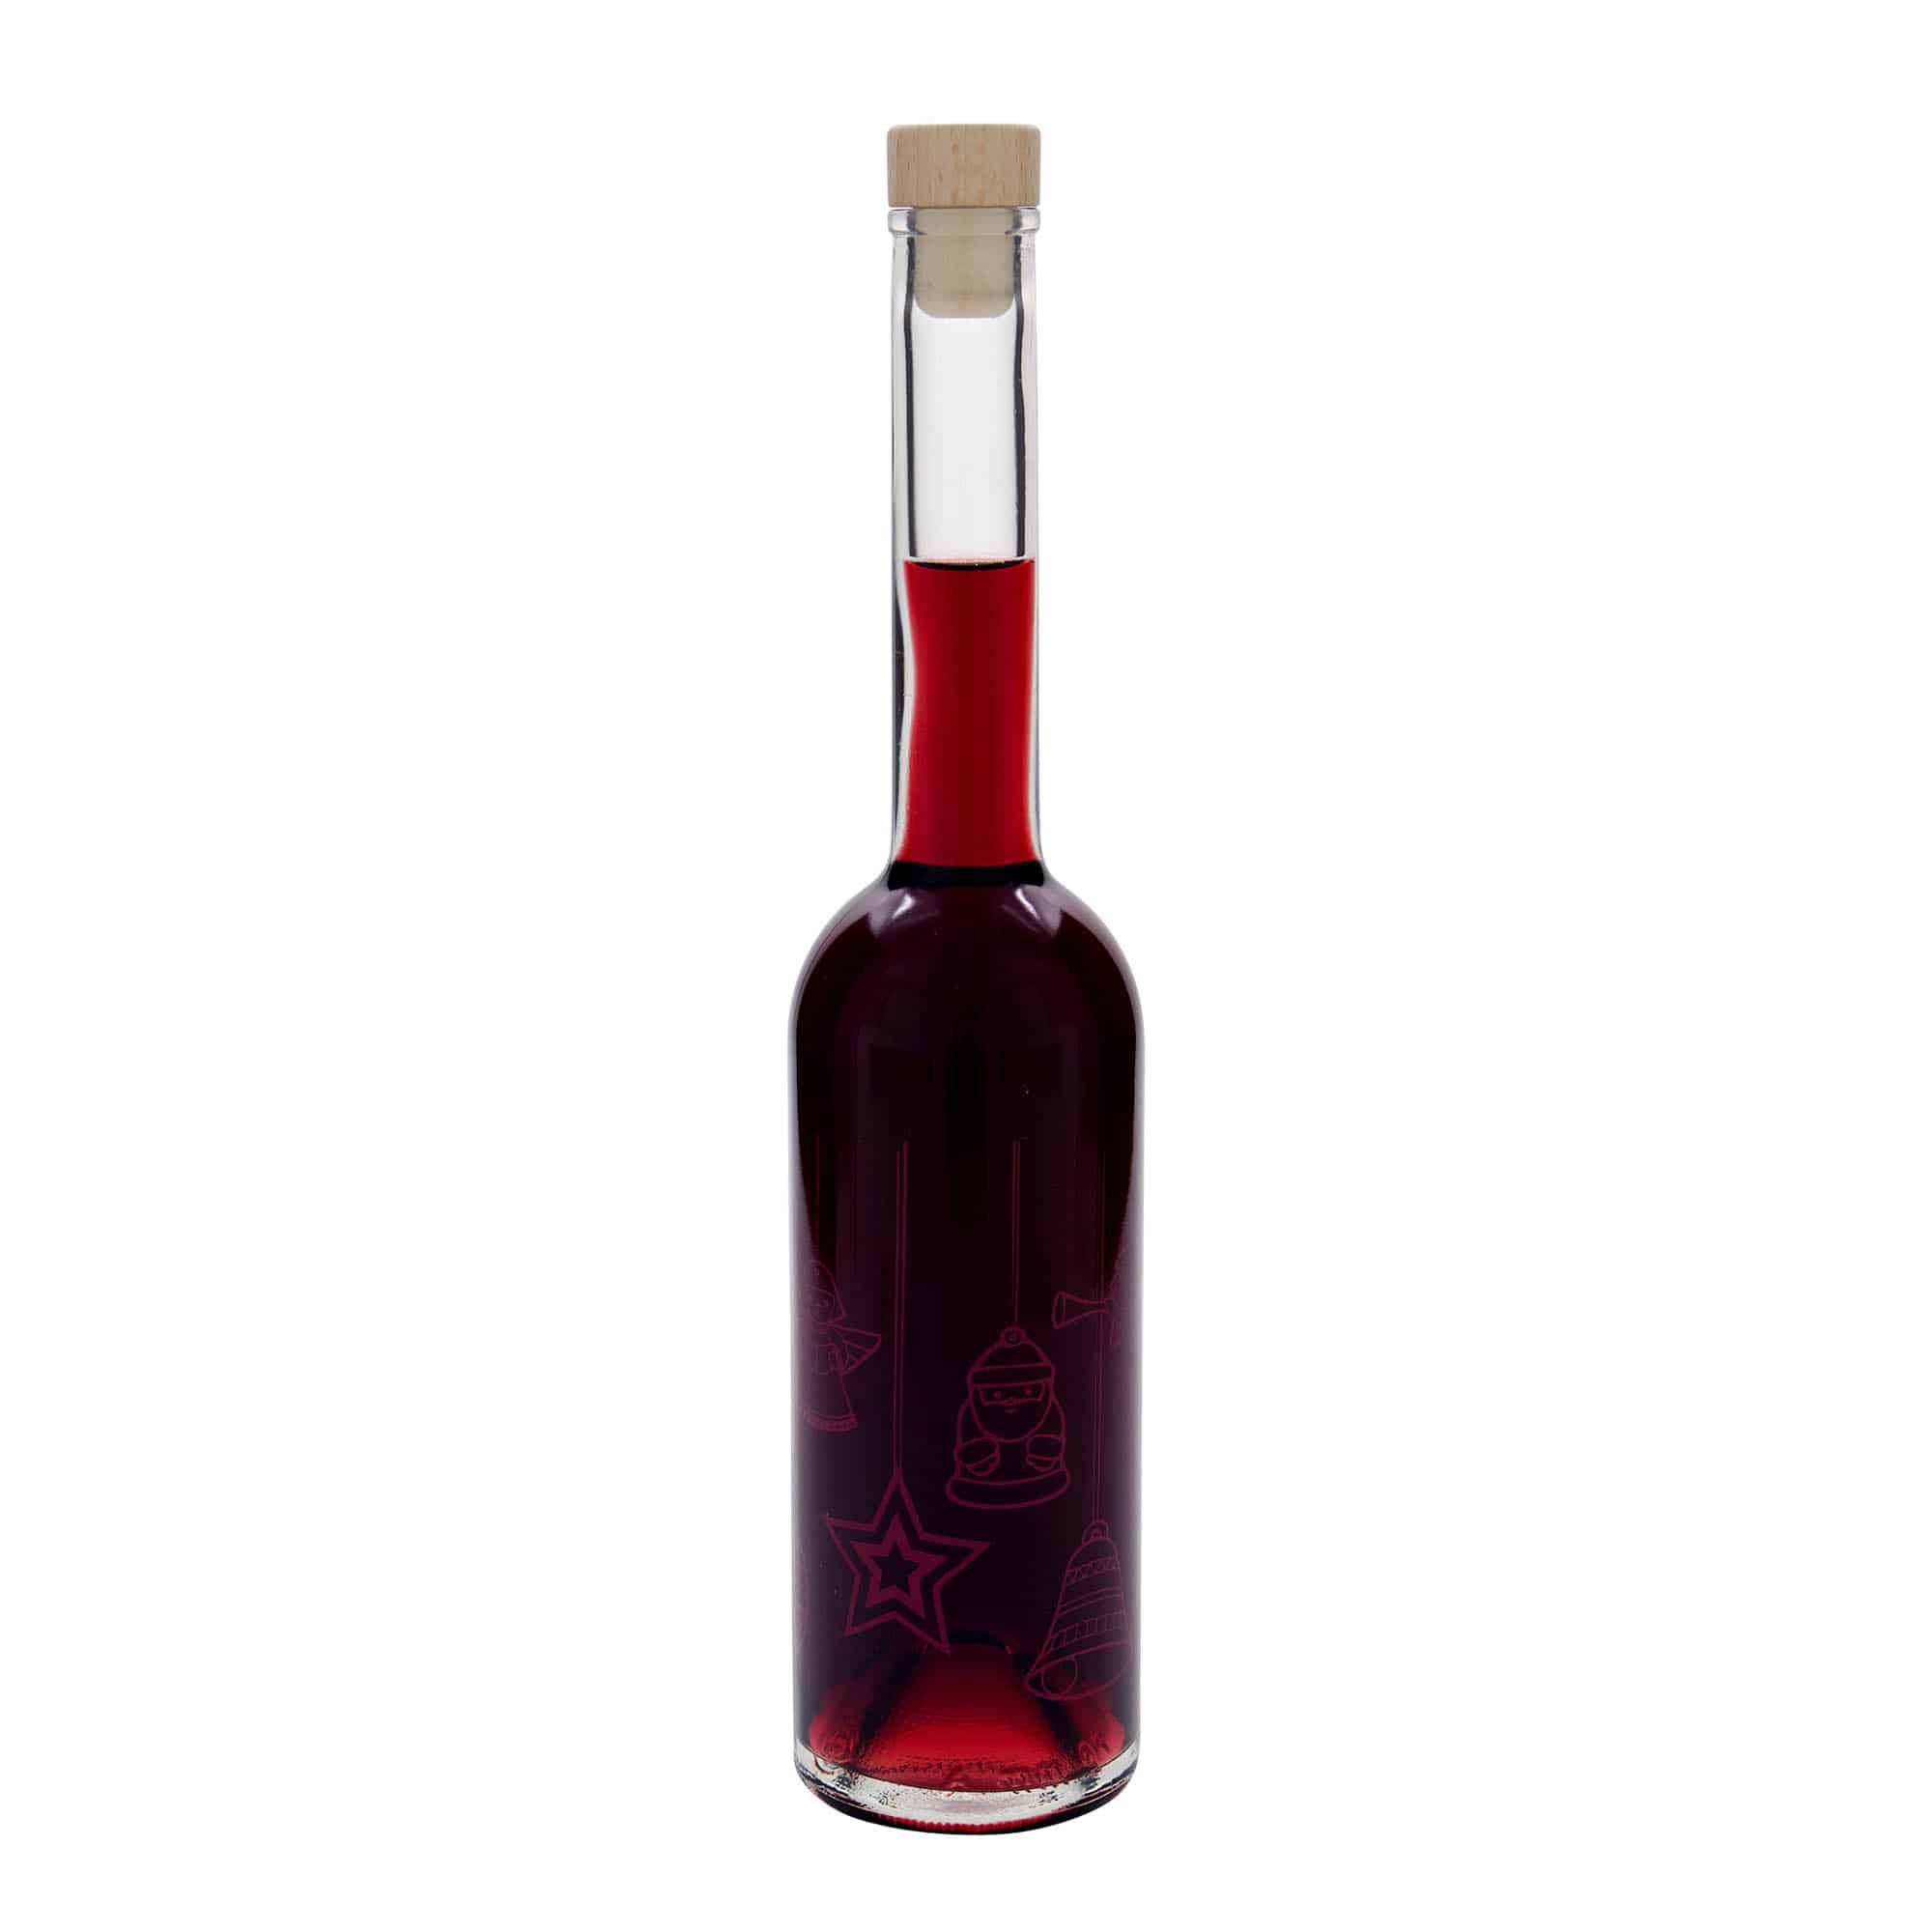 500 ml glass bottle 'Opera', print: stars, closure: cork